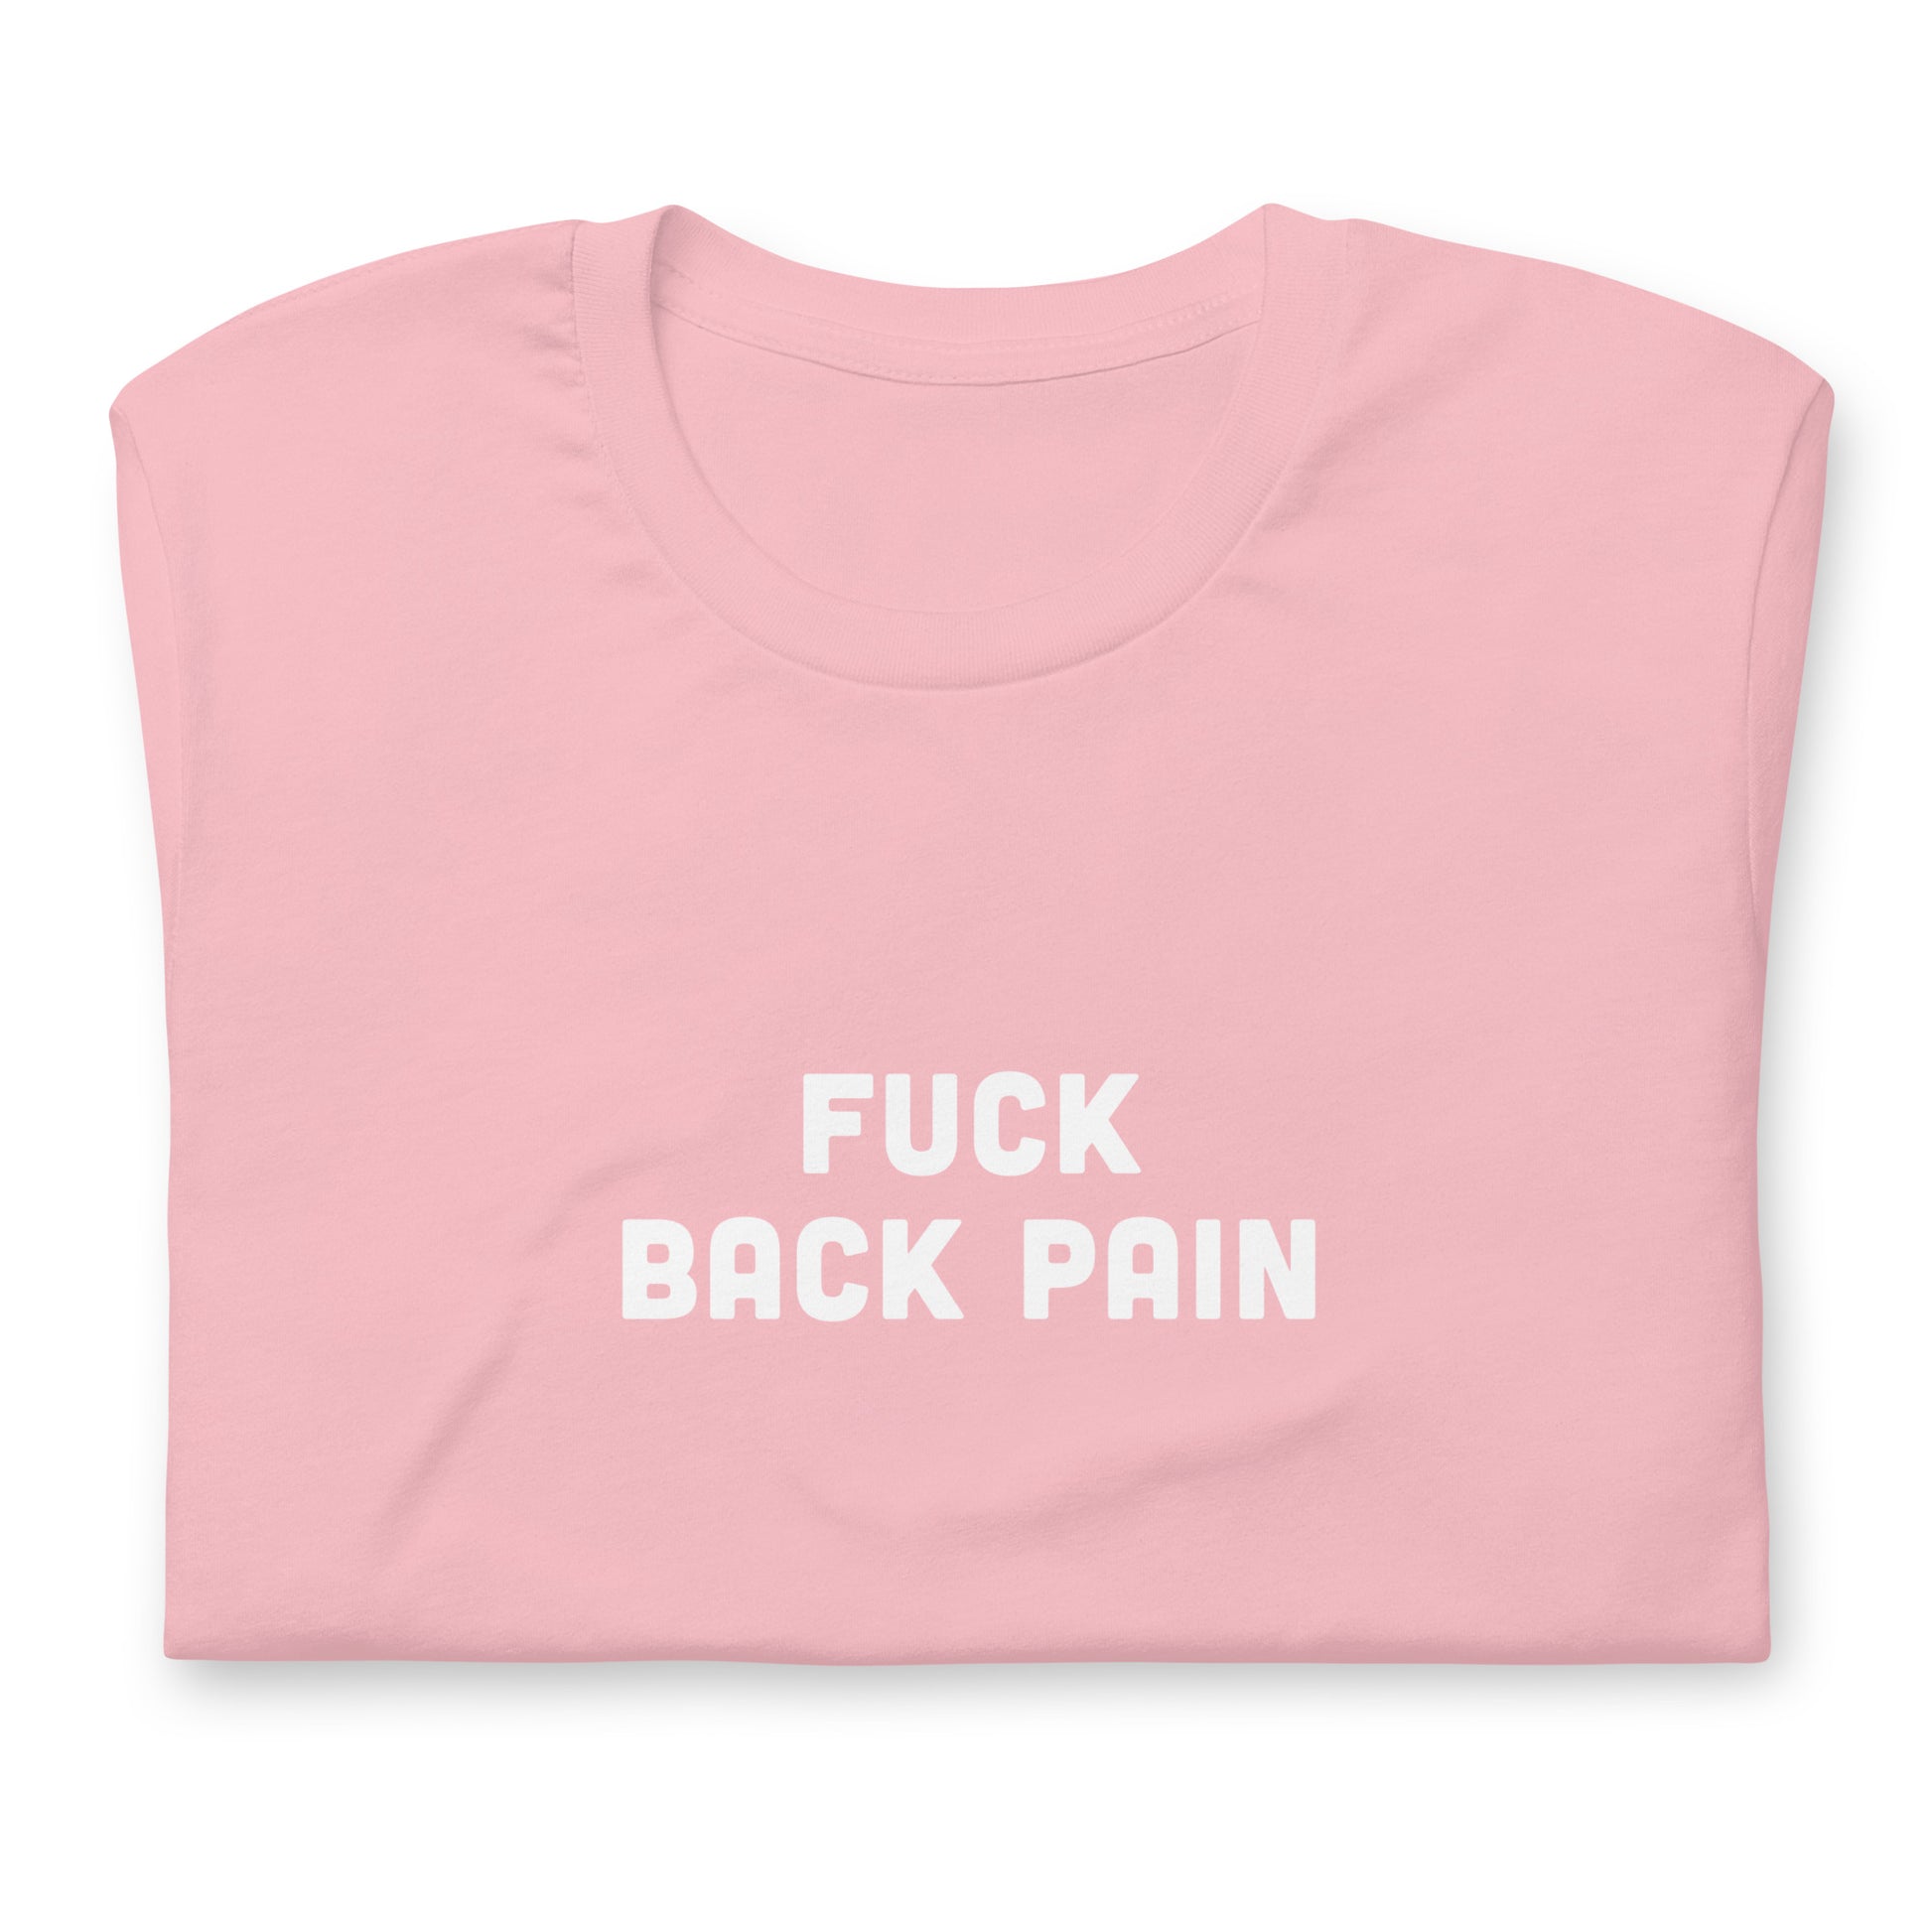 Fuck Back Pain T-Shirt Size 2XL Color Forest